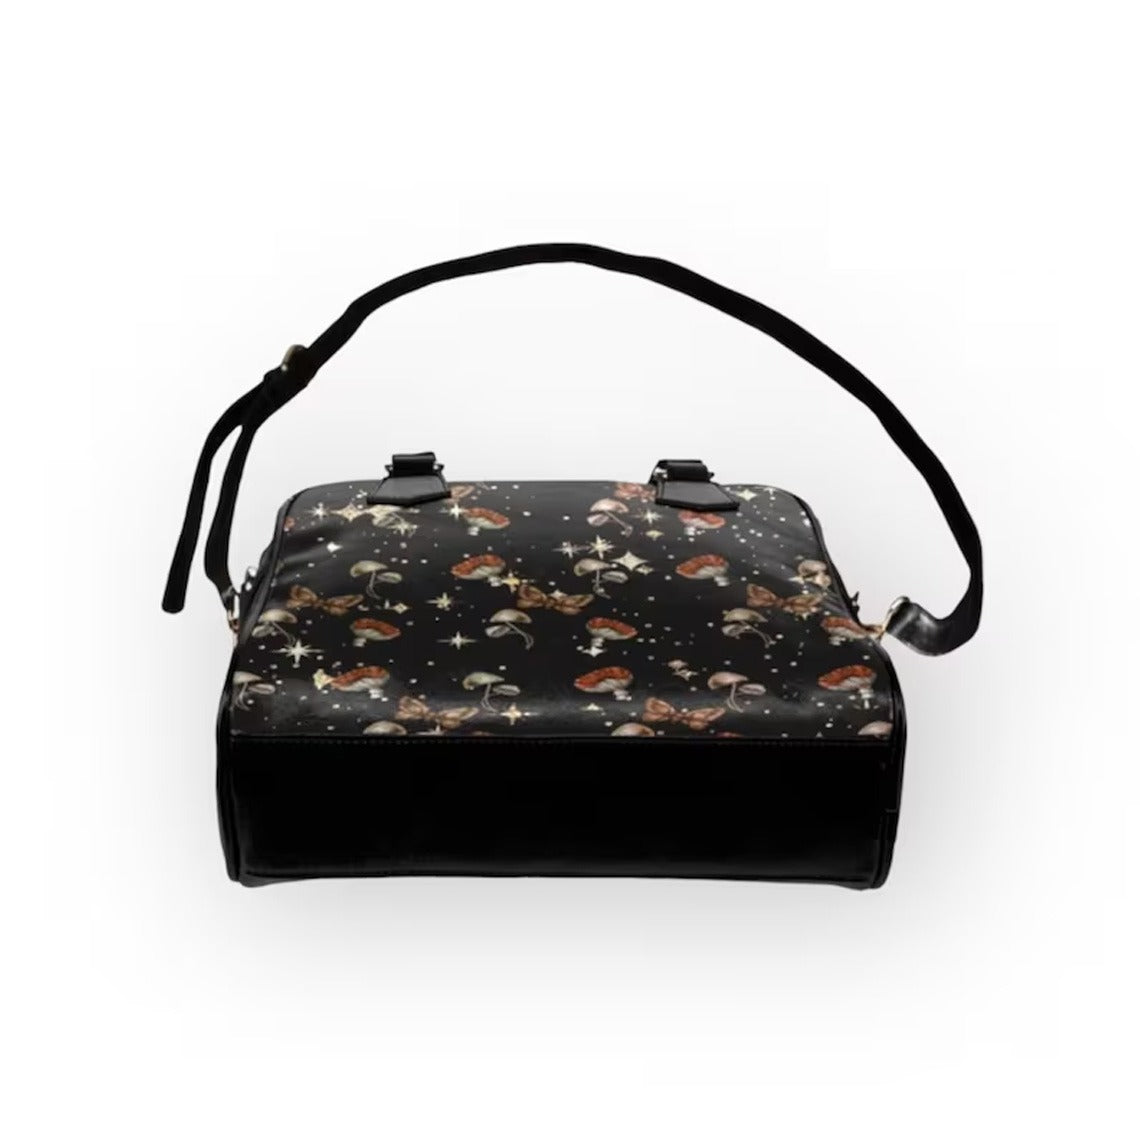 Louis Vuitton Black Mushroom Shoulder Bag